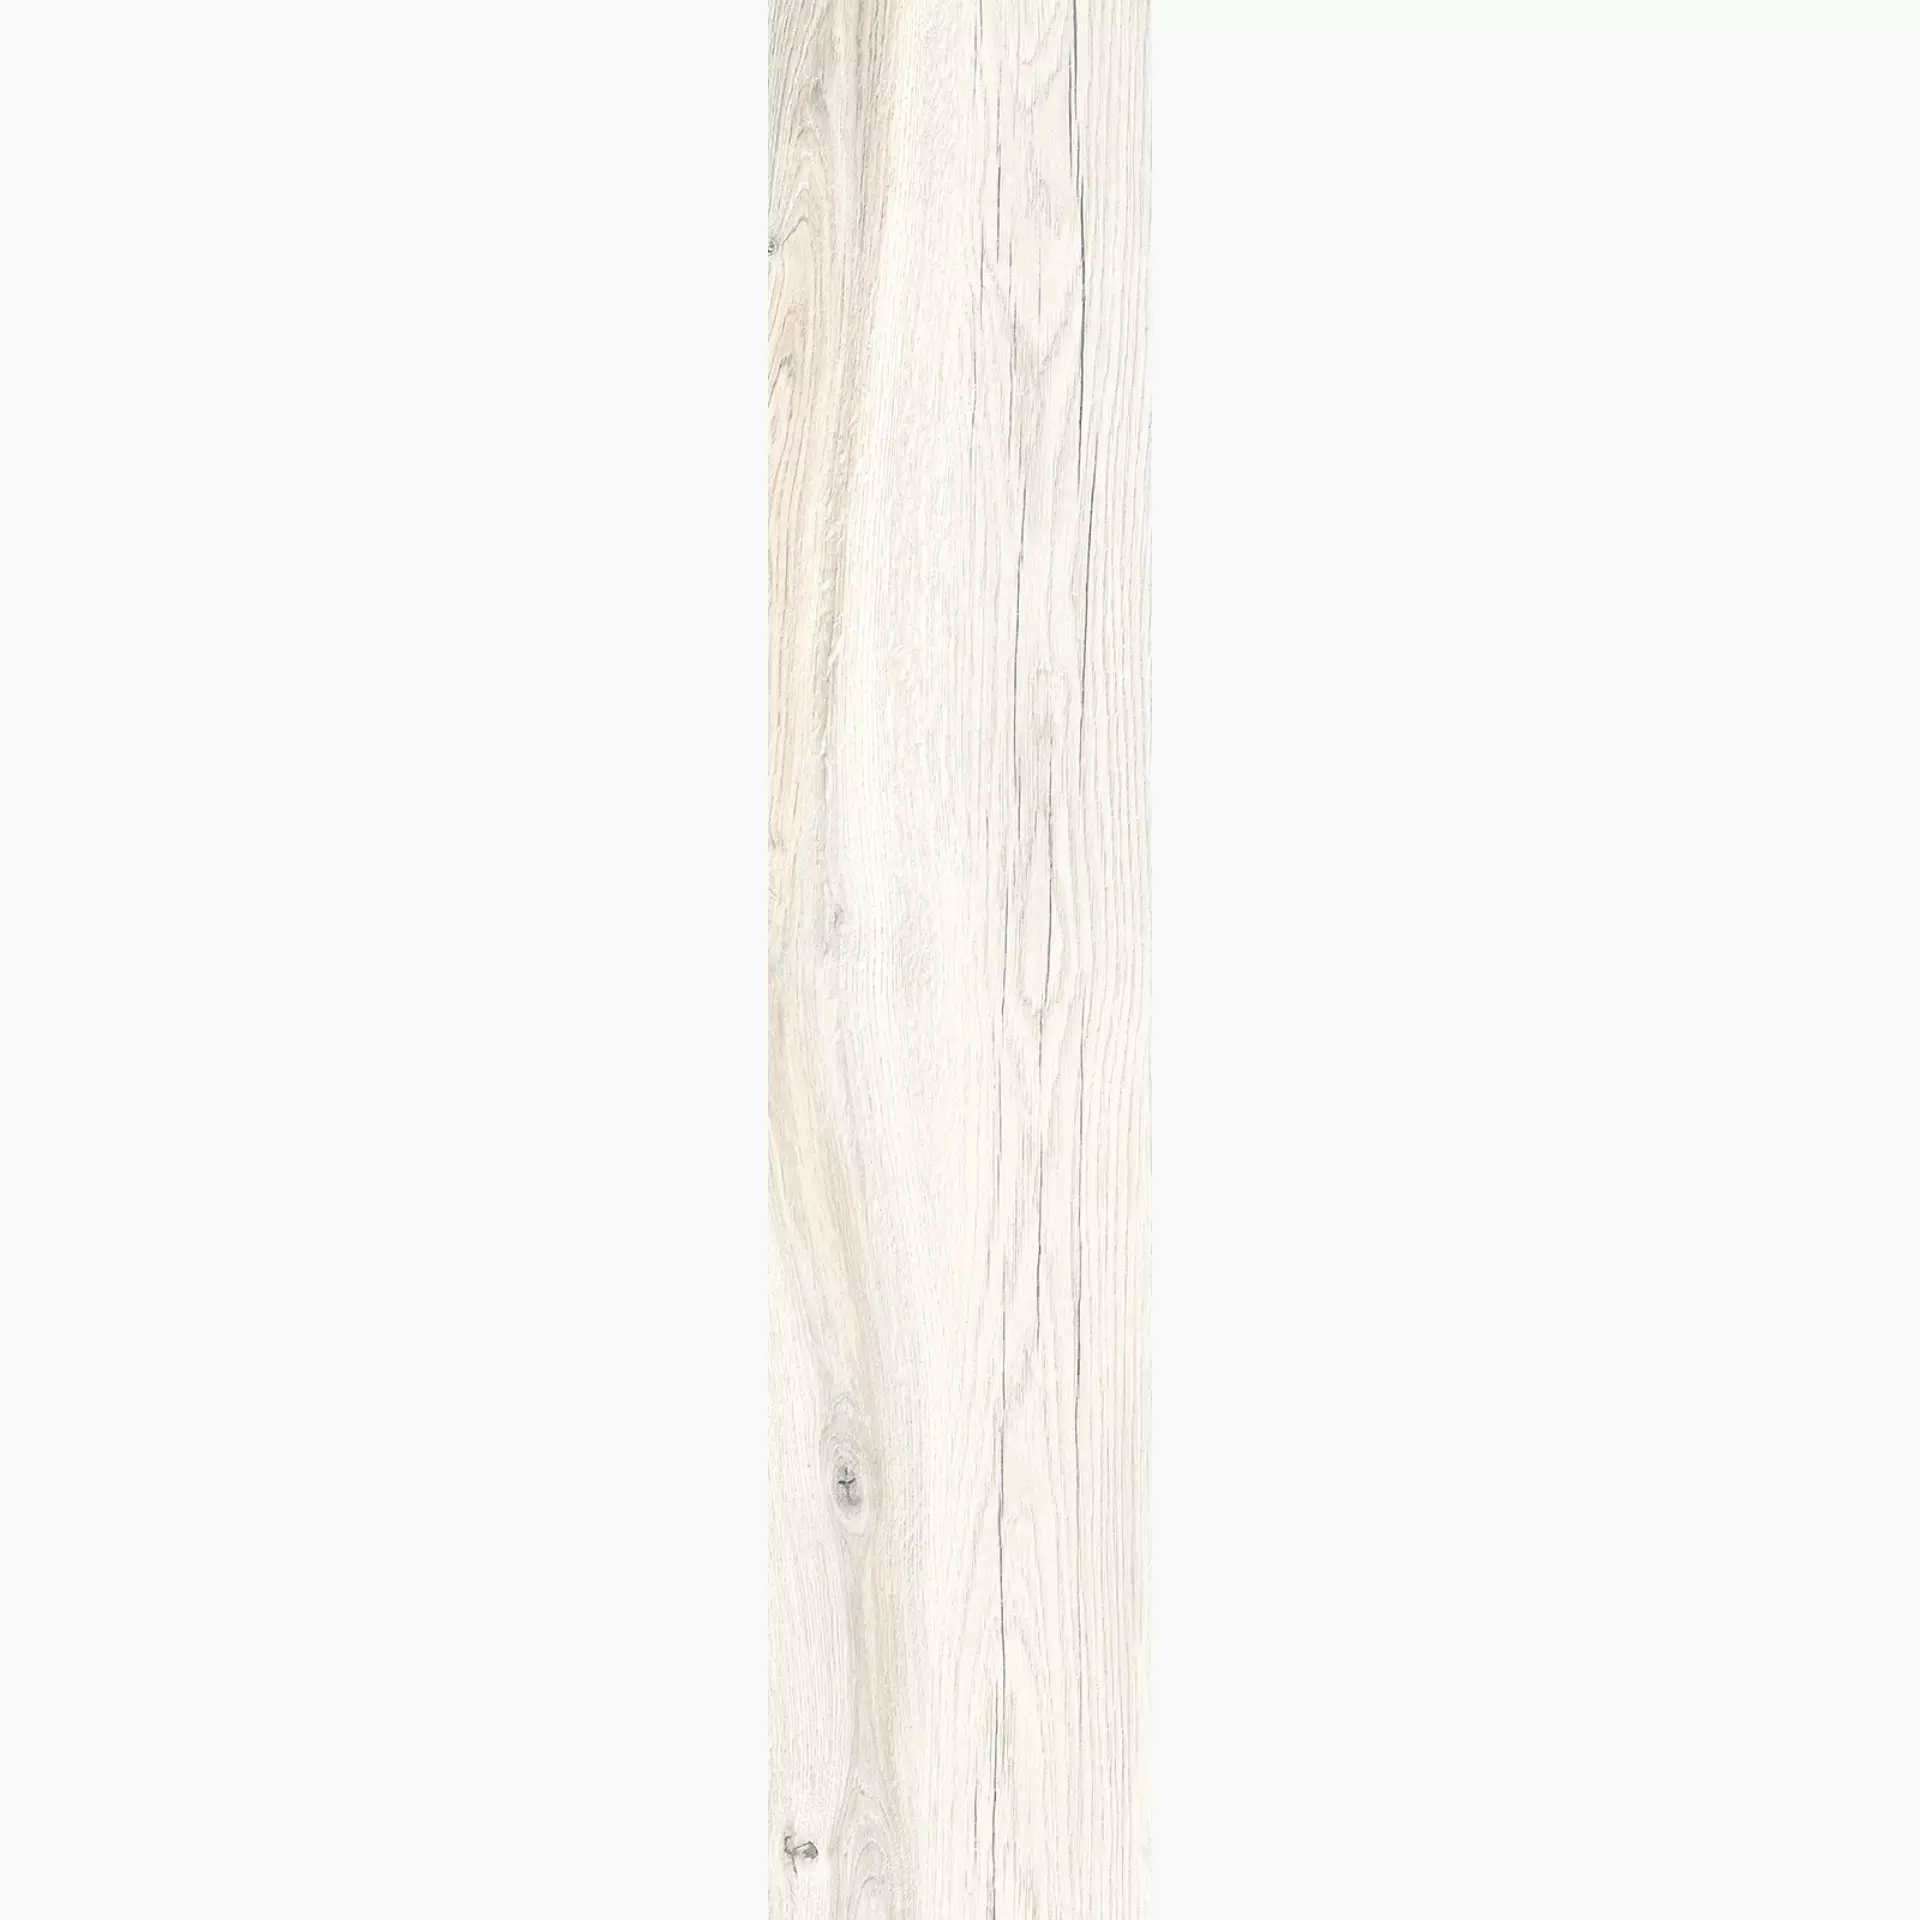 Rondine Daring Ivory Naturale J88443 24x120cm 8,5mm